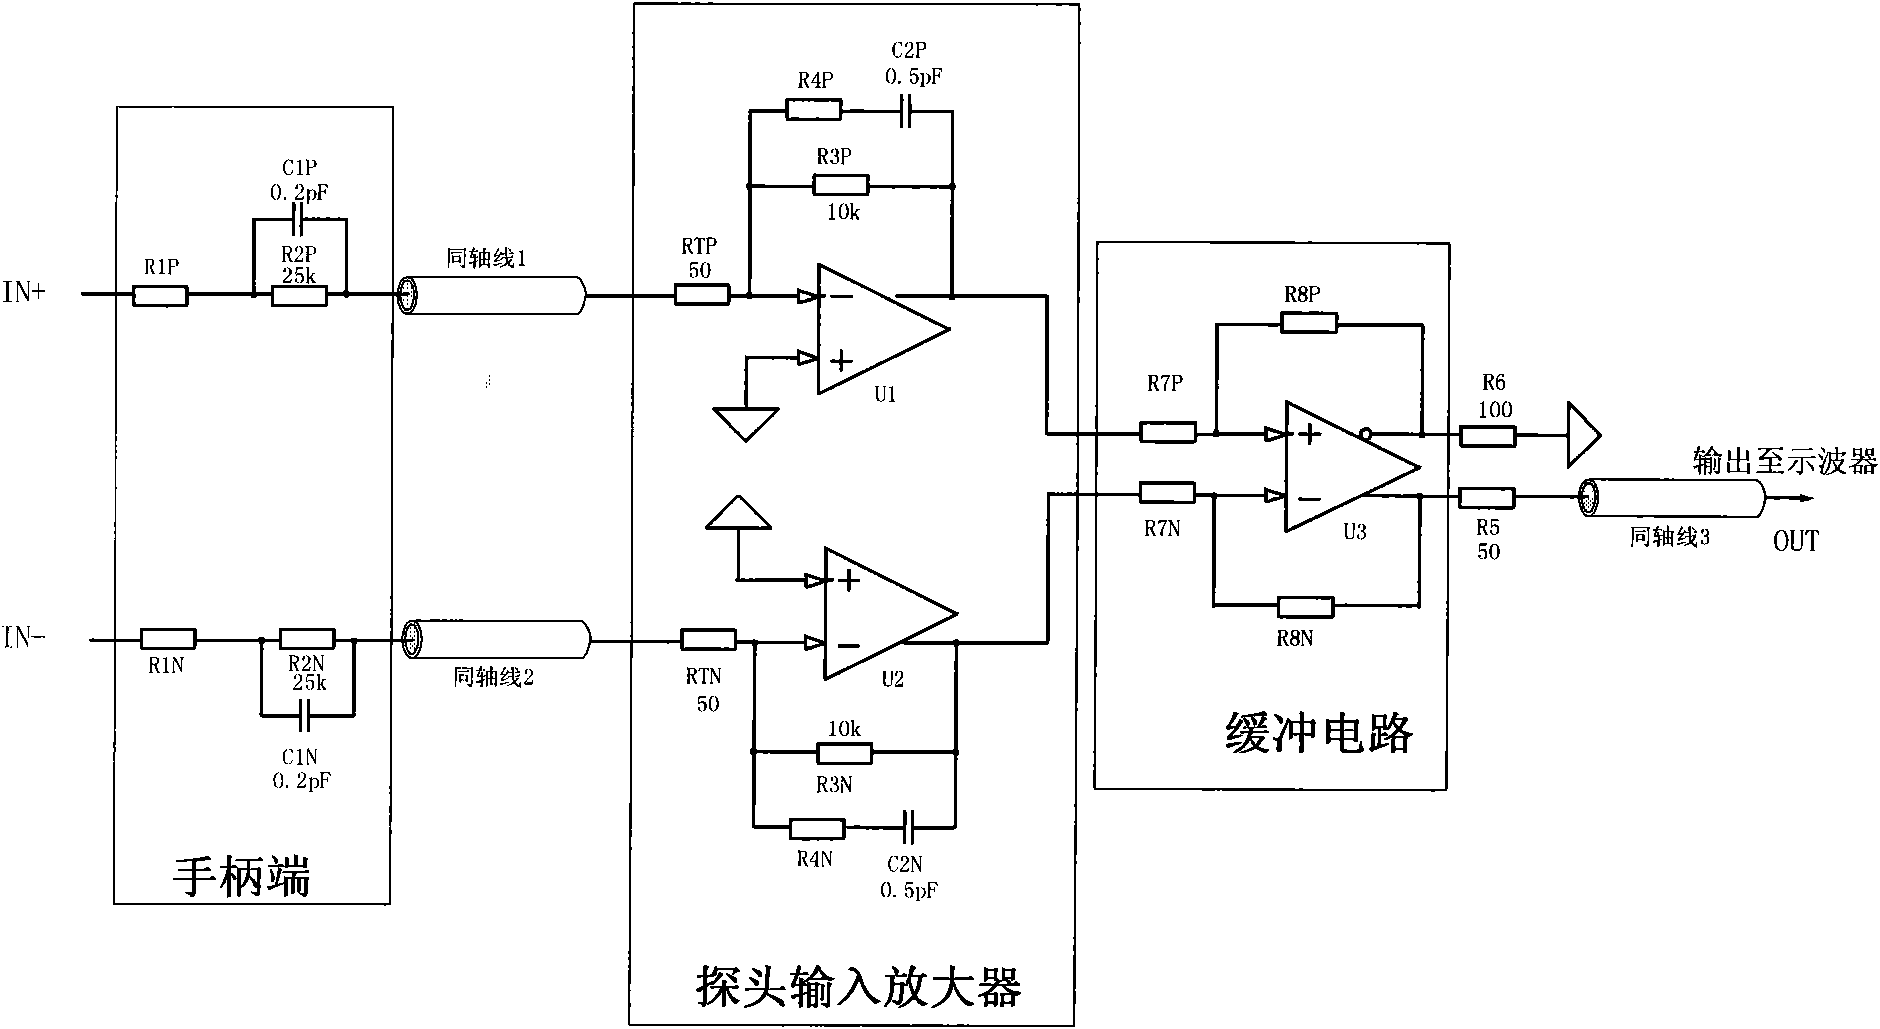 Active differential voltage probe